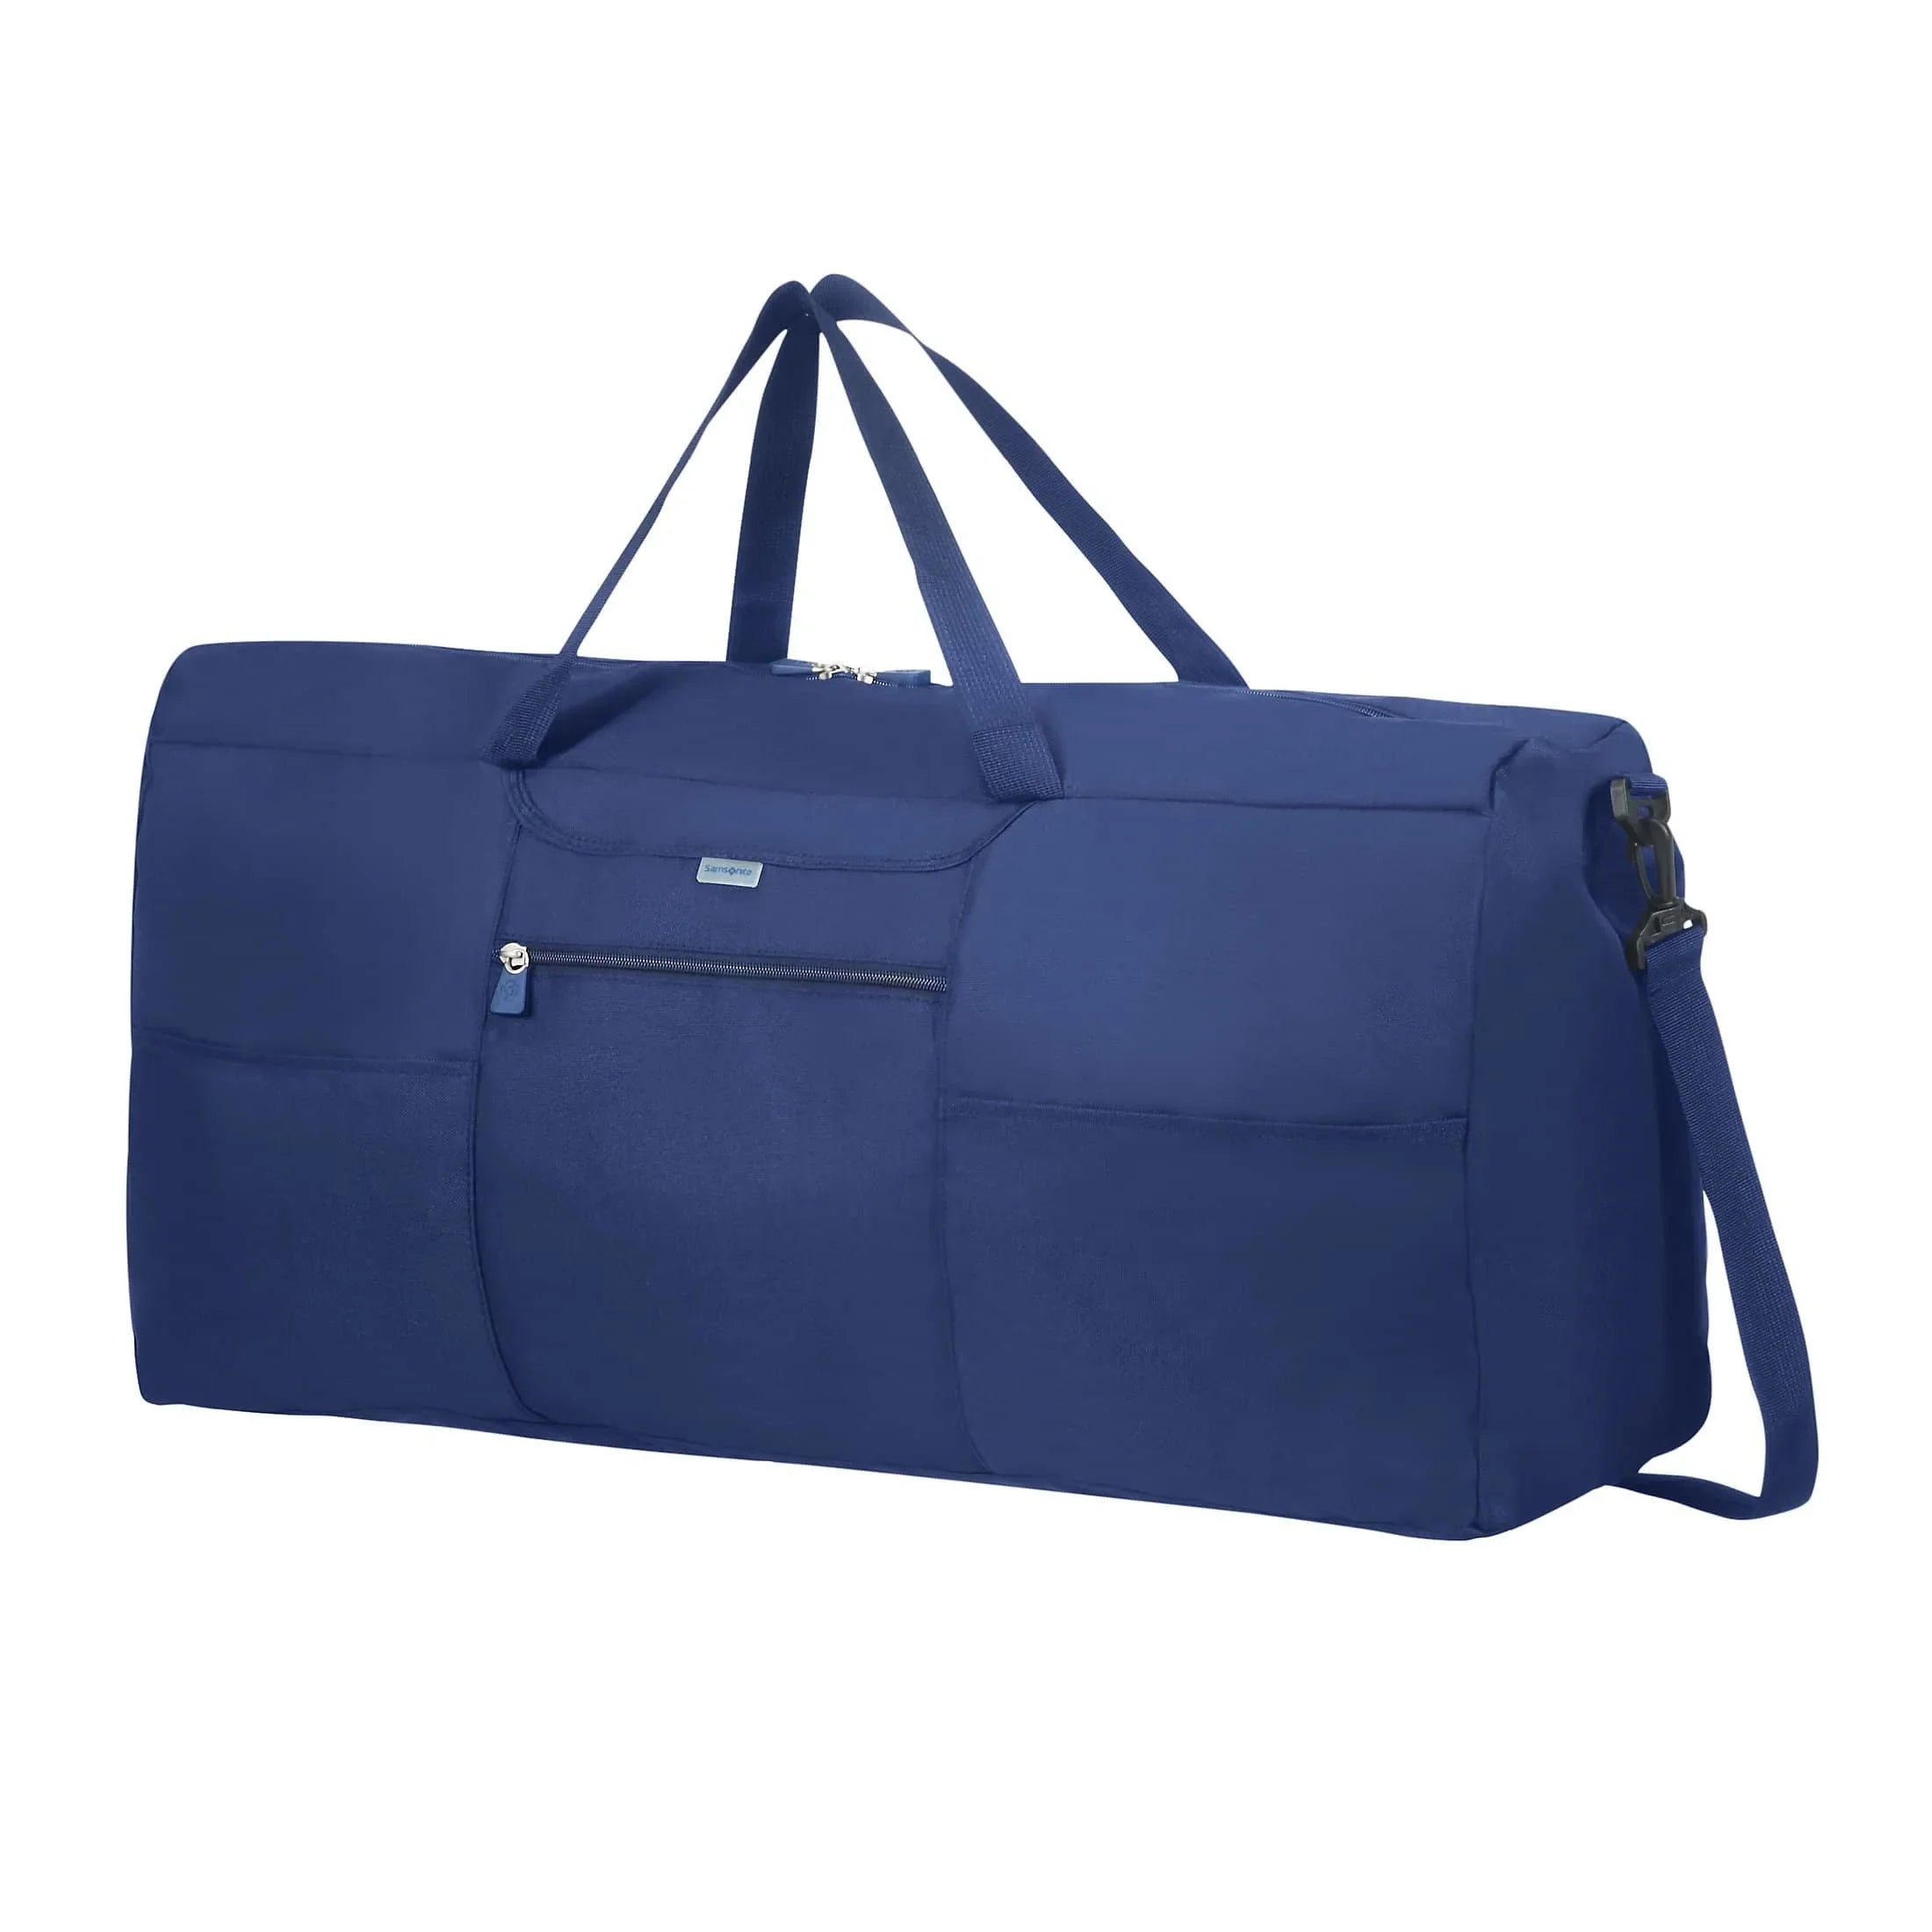 Samsonite Travel Accessories sac de voyage 70 cm - bleu nuit